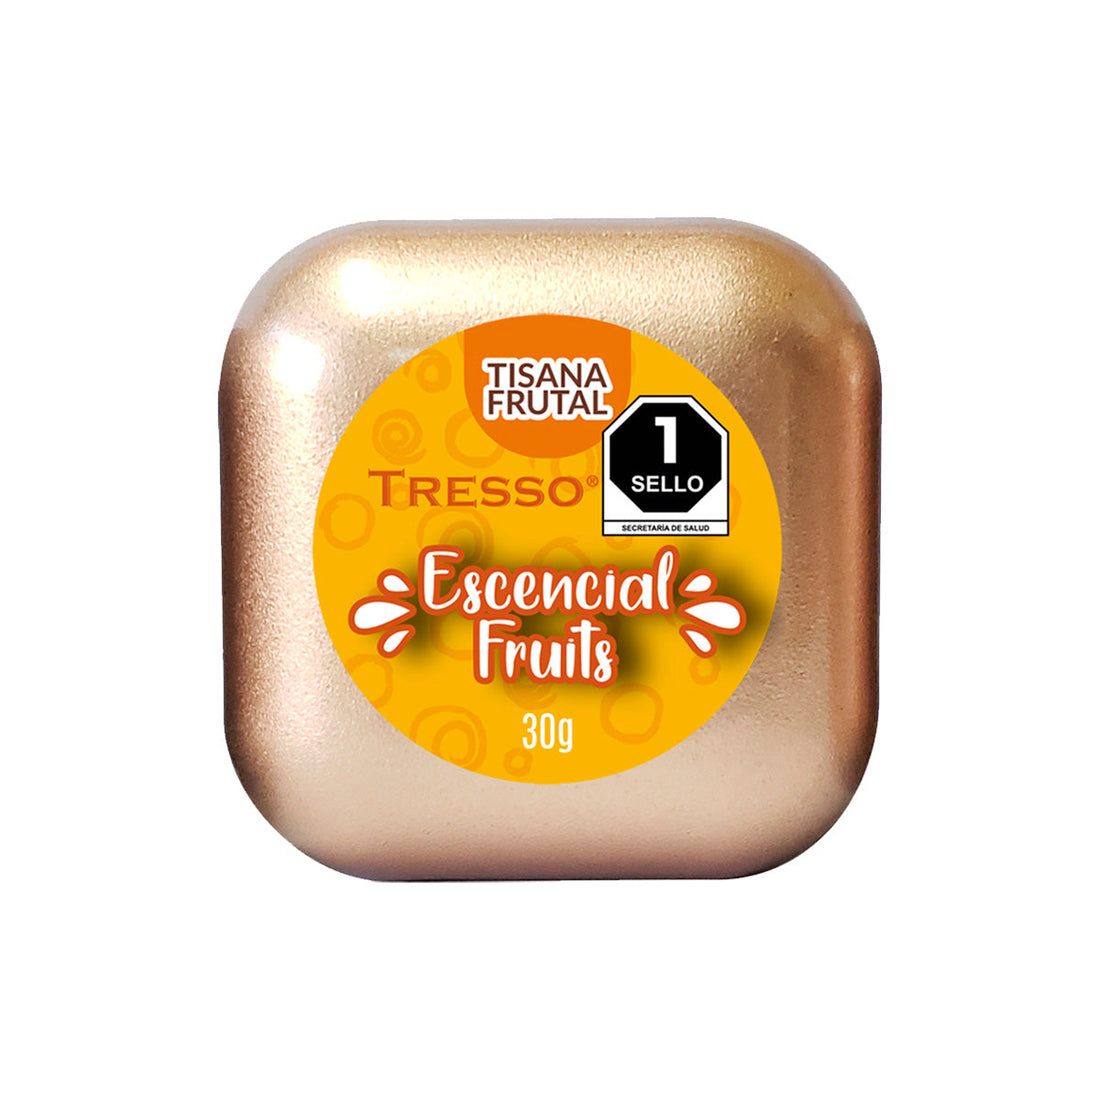 Tisana Frutal: Escencial Fruits 30 G Tisana TRESSO® 30 g 